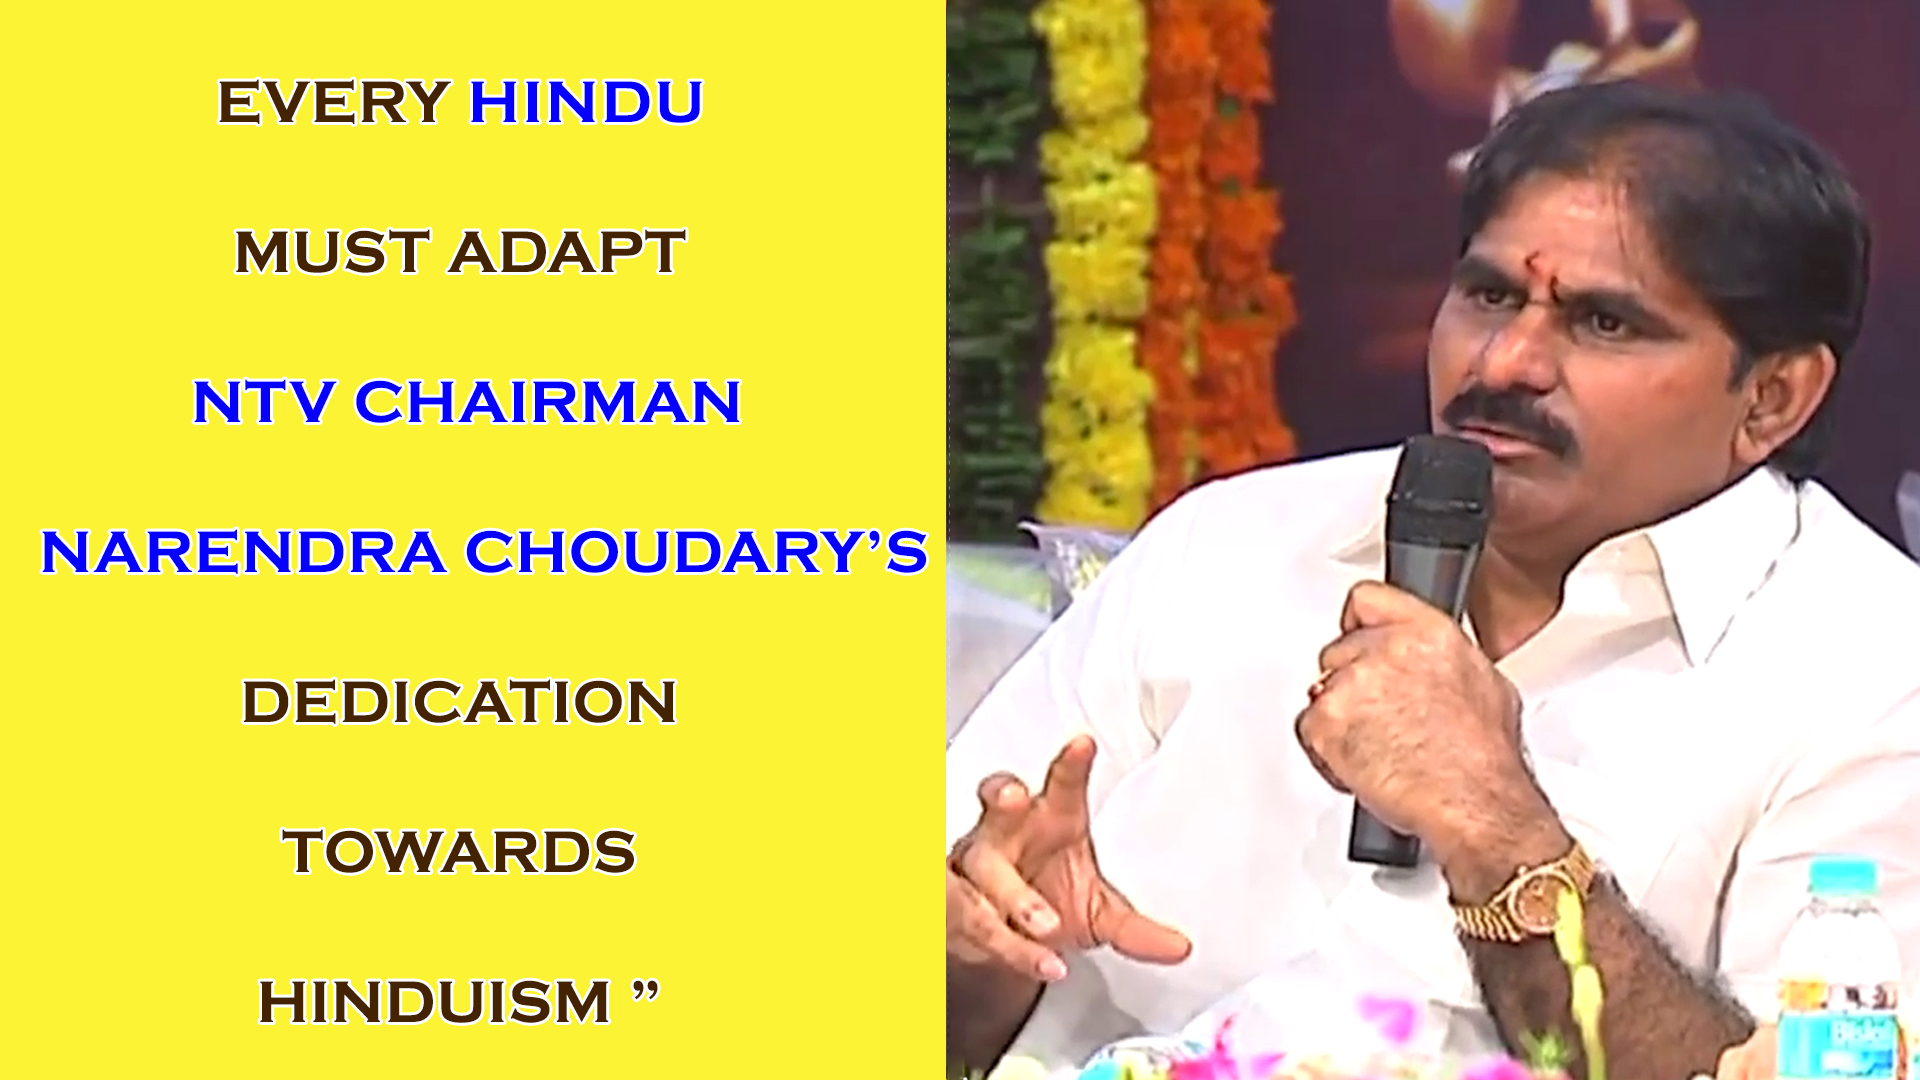 NTV Chairman Narendra  Choudary EveryHindu MustadaptNarendra Choudary’s dedication towards Hinduism